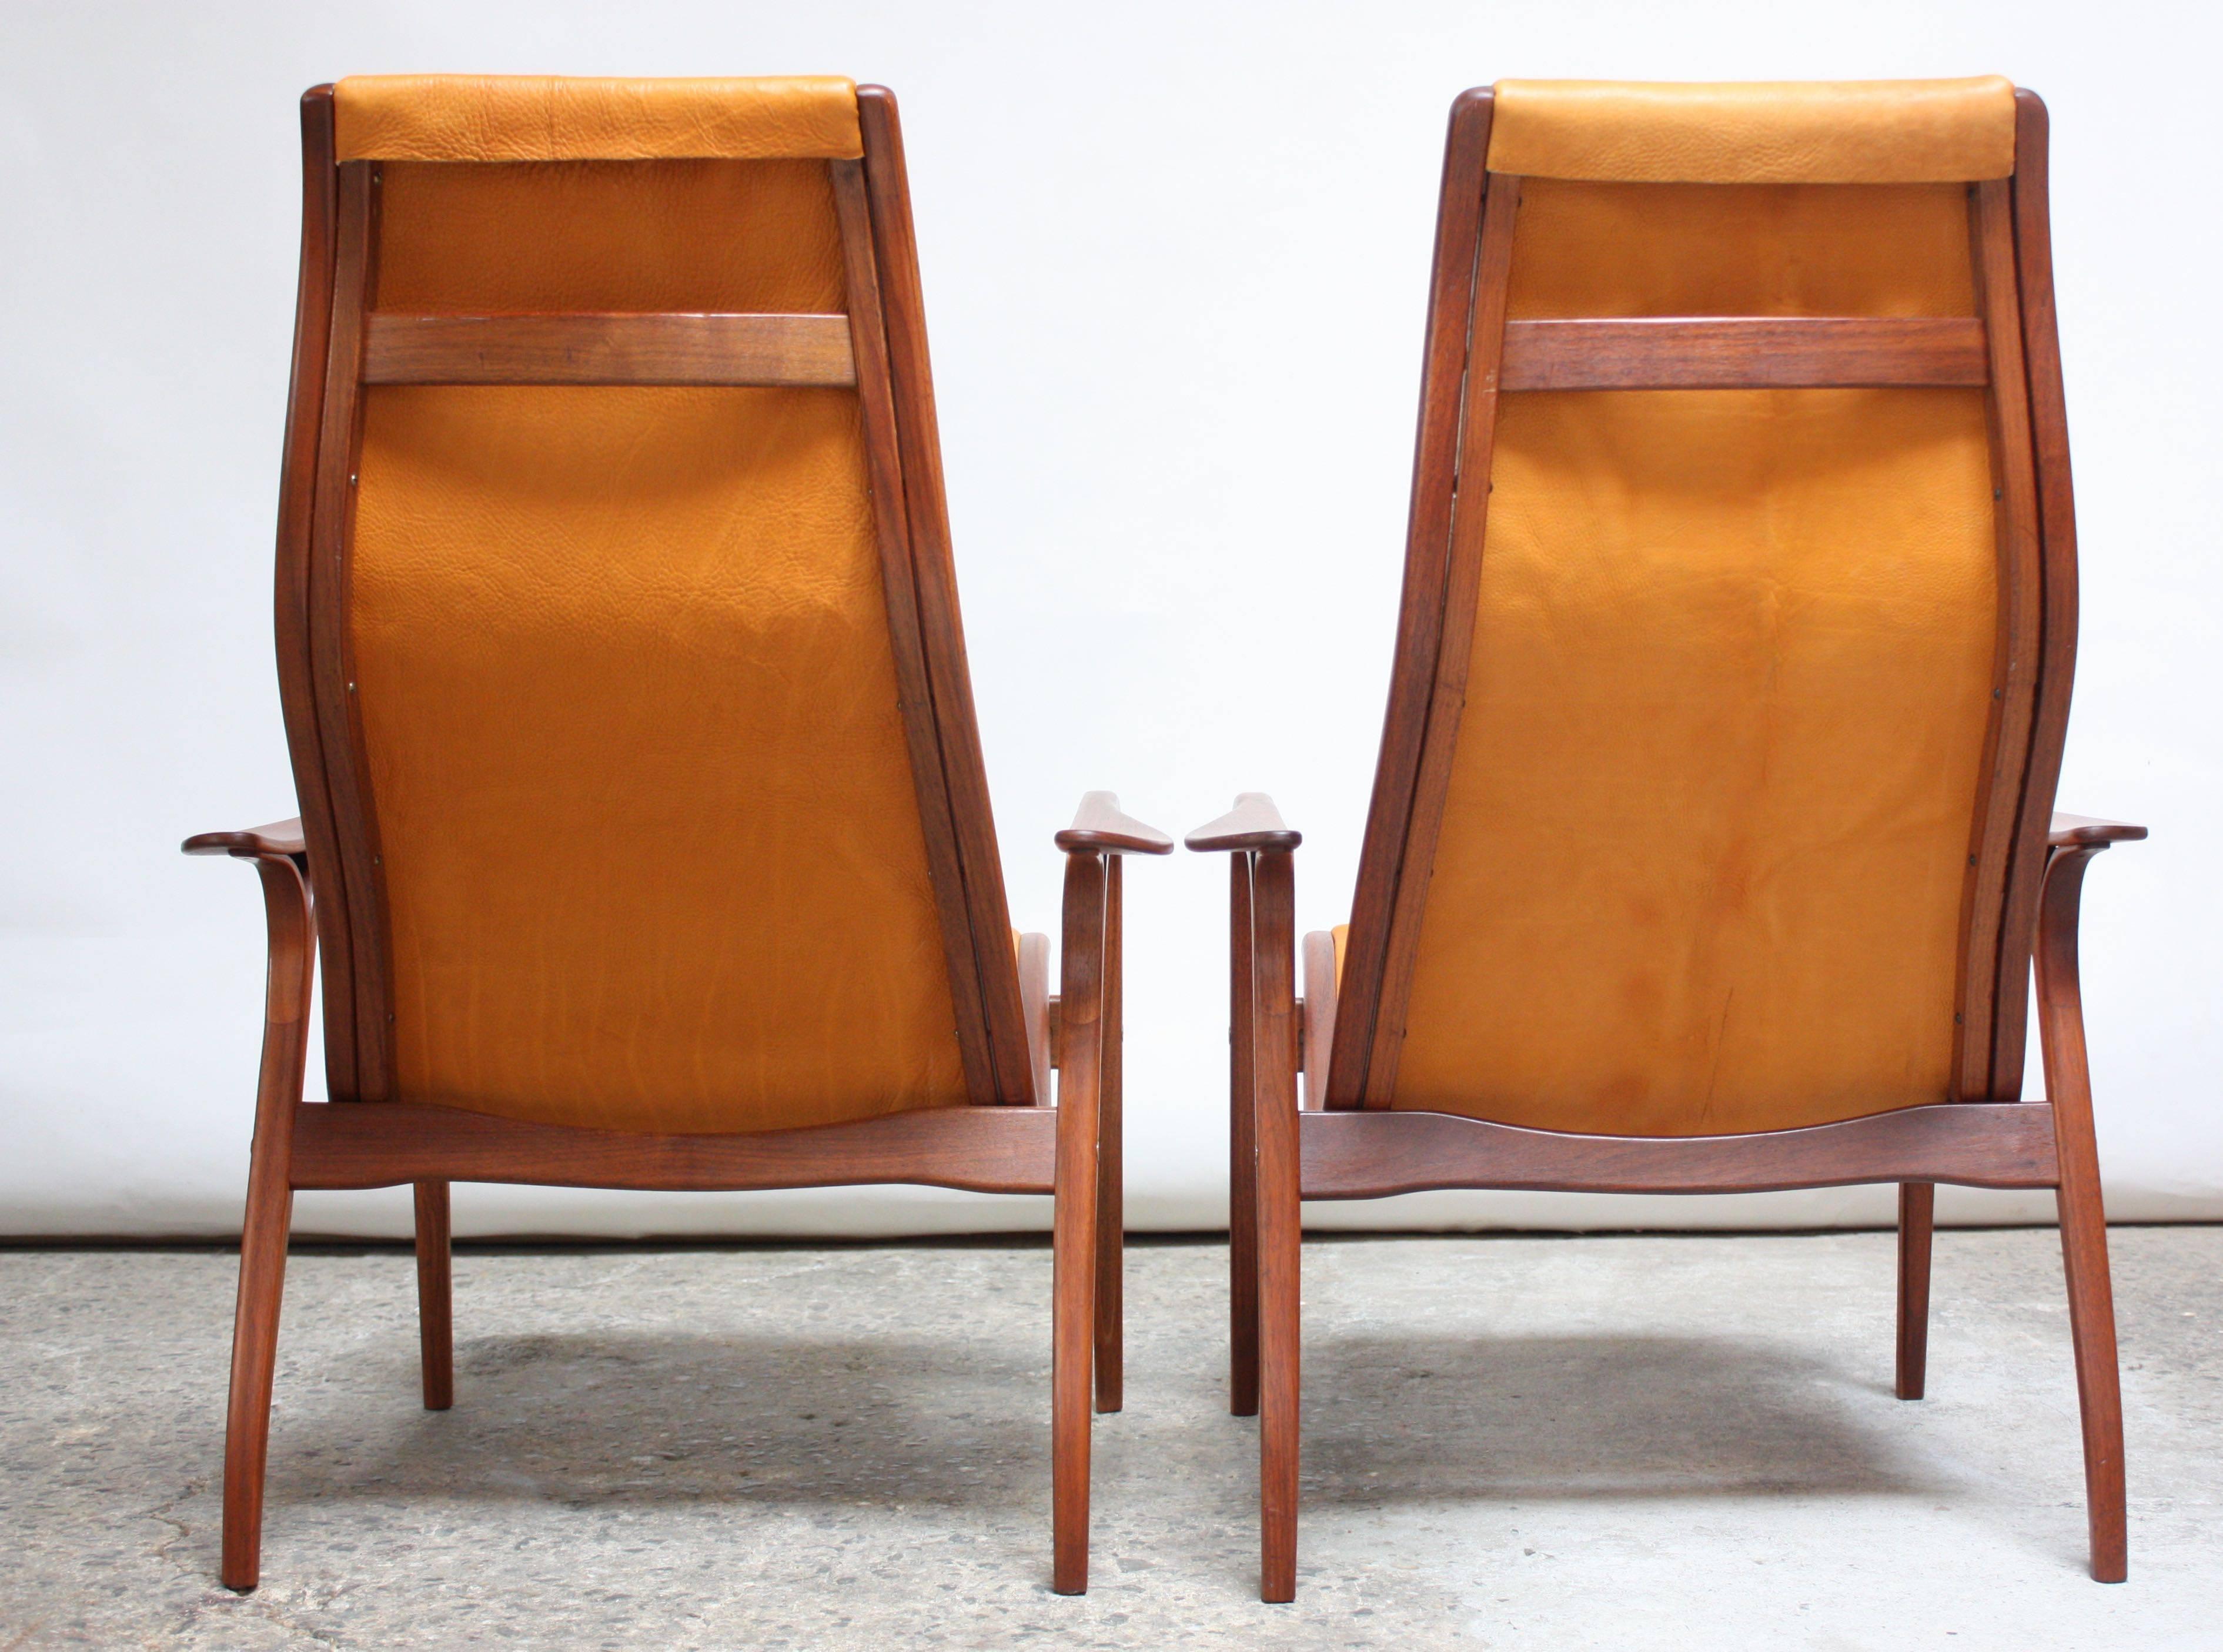 Mid-20th Century Pair of Swedish Teak and Leather 'Lamino' Chairs by Yngve Ekström